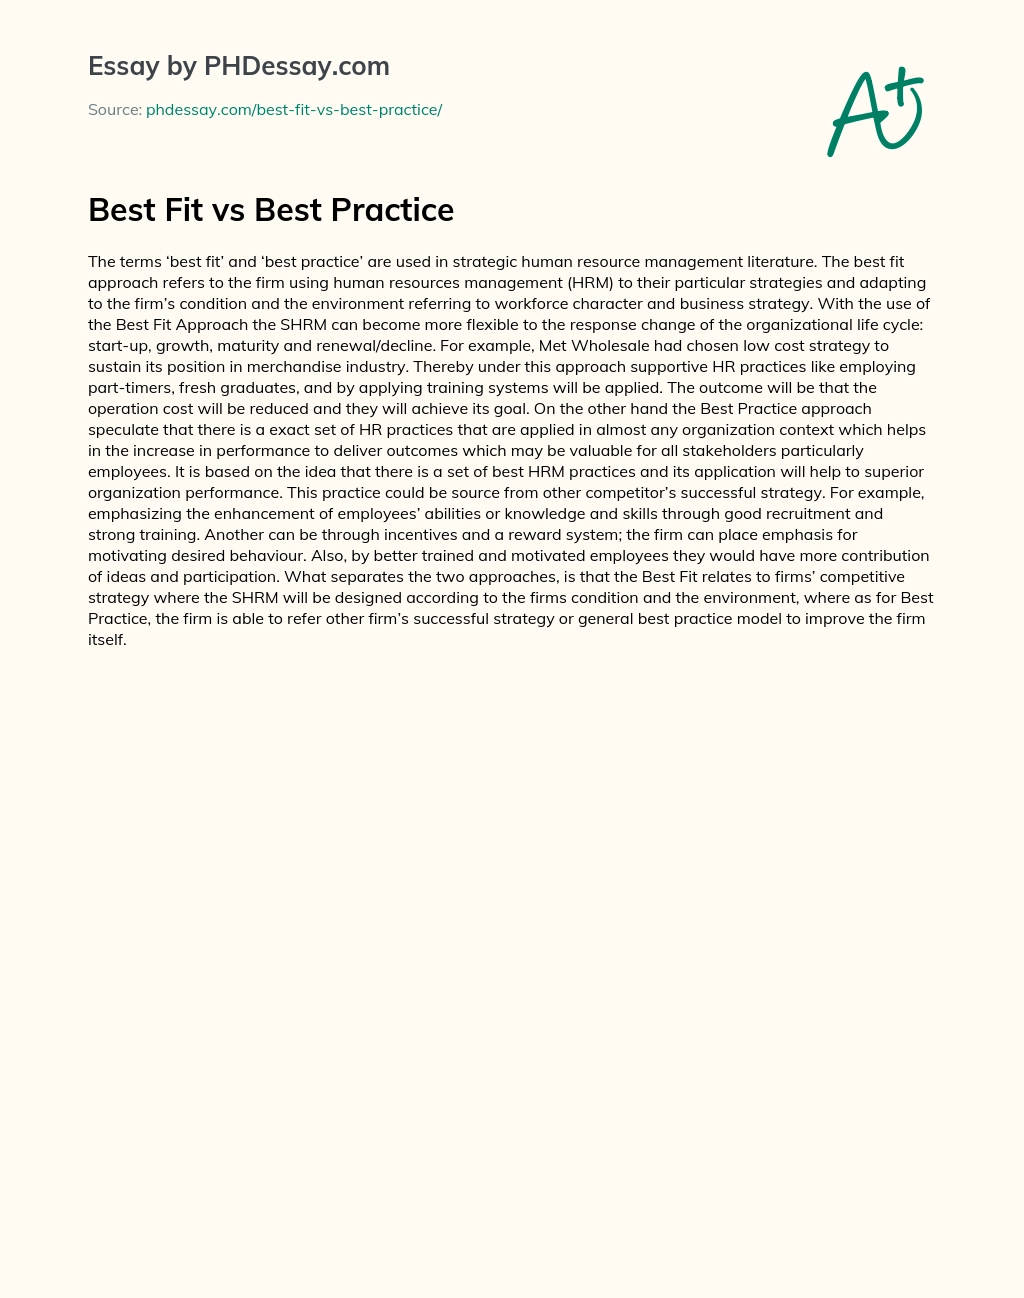 Best Fit vs Best Practice essay